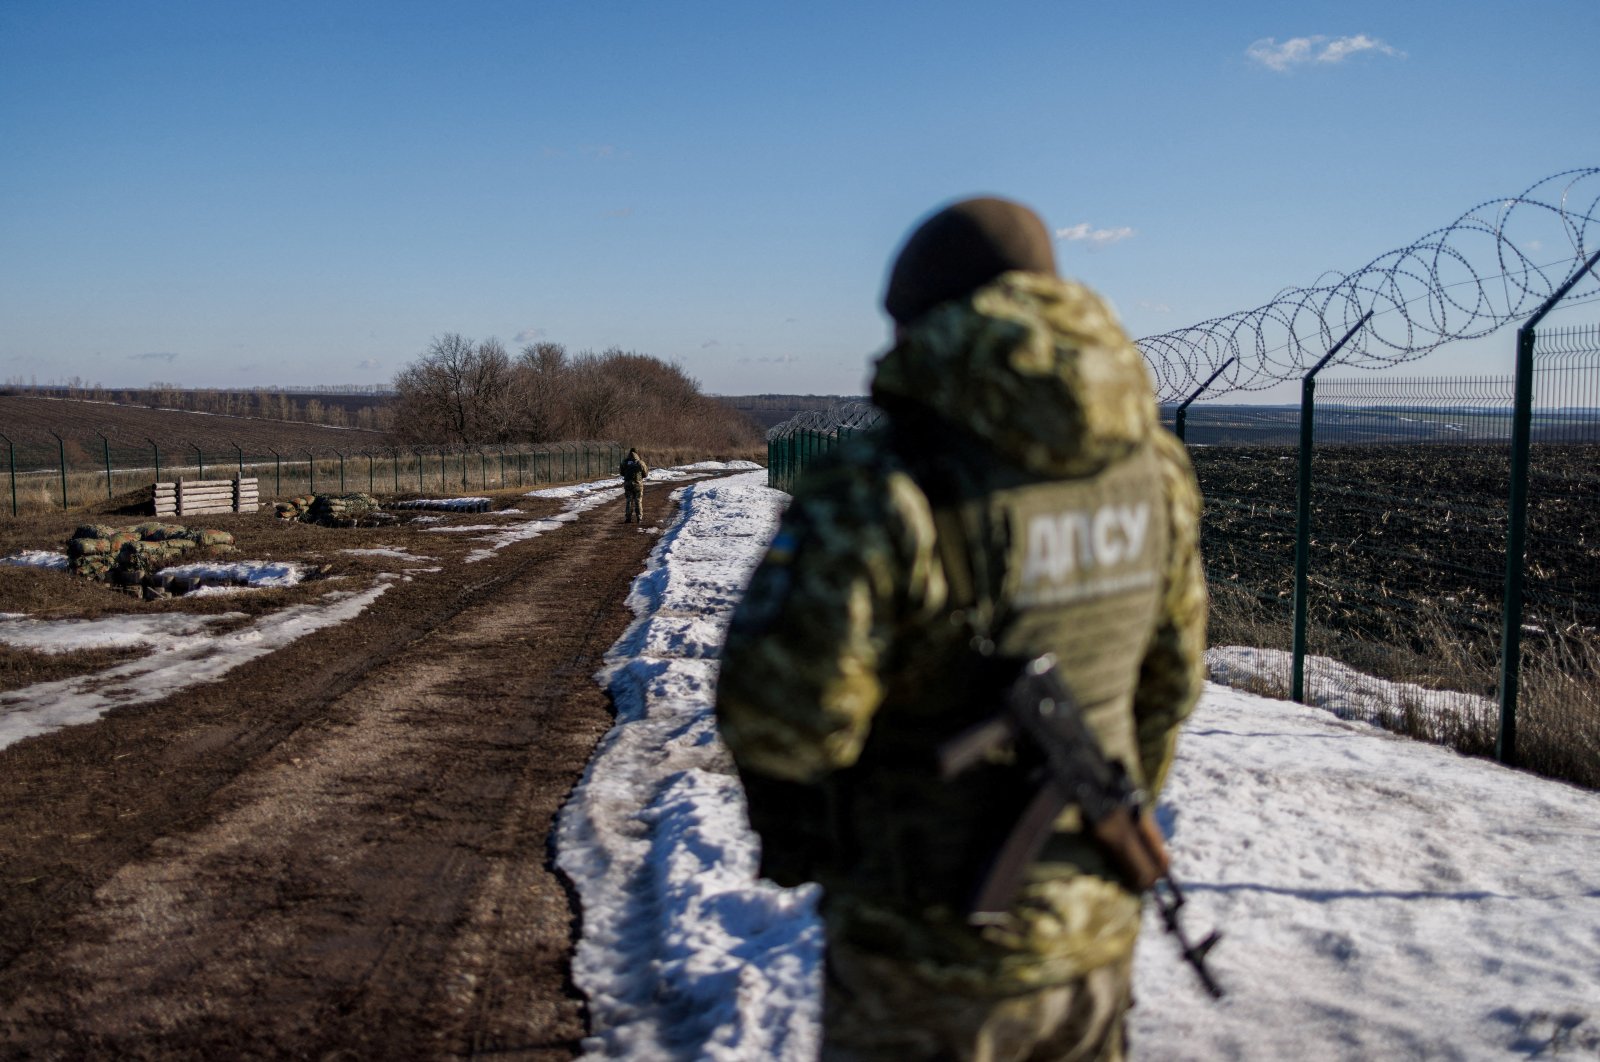 Ukrainian frontier guards patrol an area along the Ukrainian-Russian border in the Kharkiv region, Ukraine Feb. 23, 2022. (Reuters Photo)